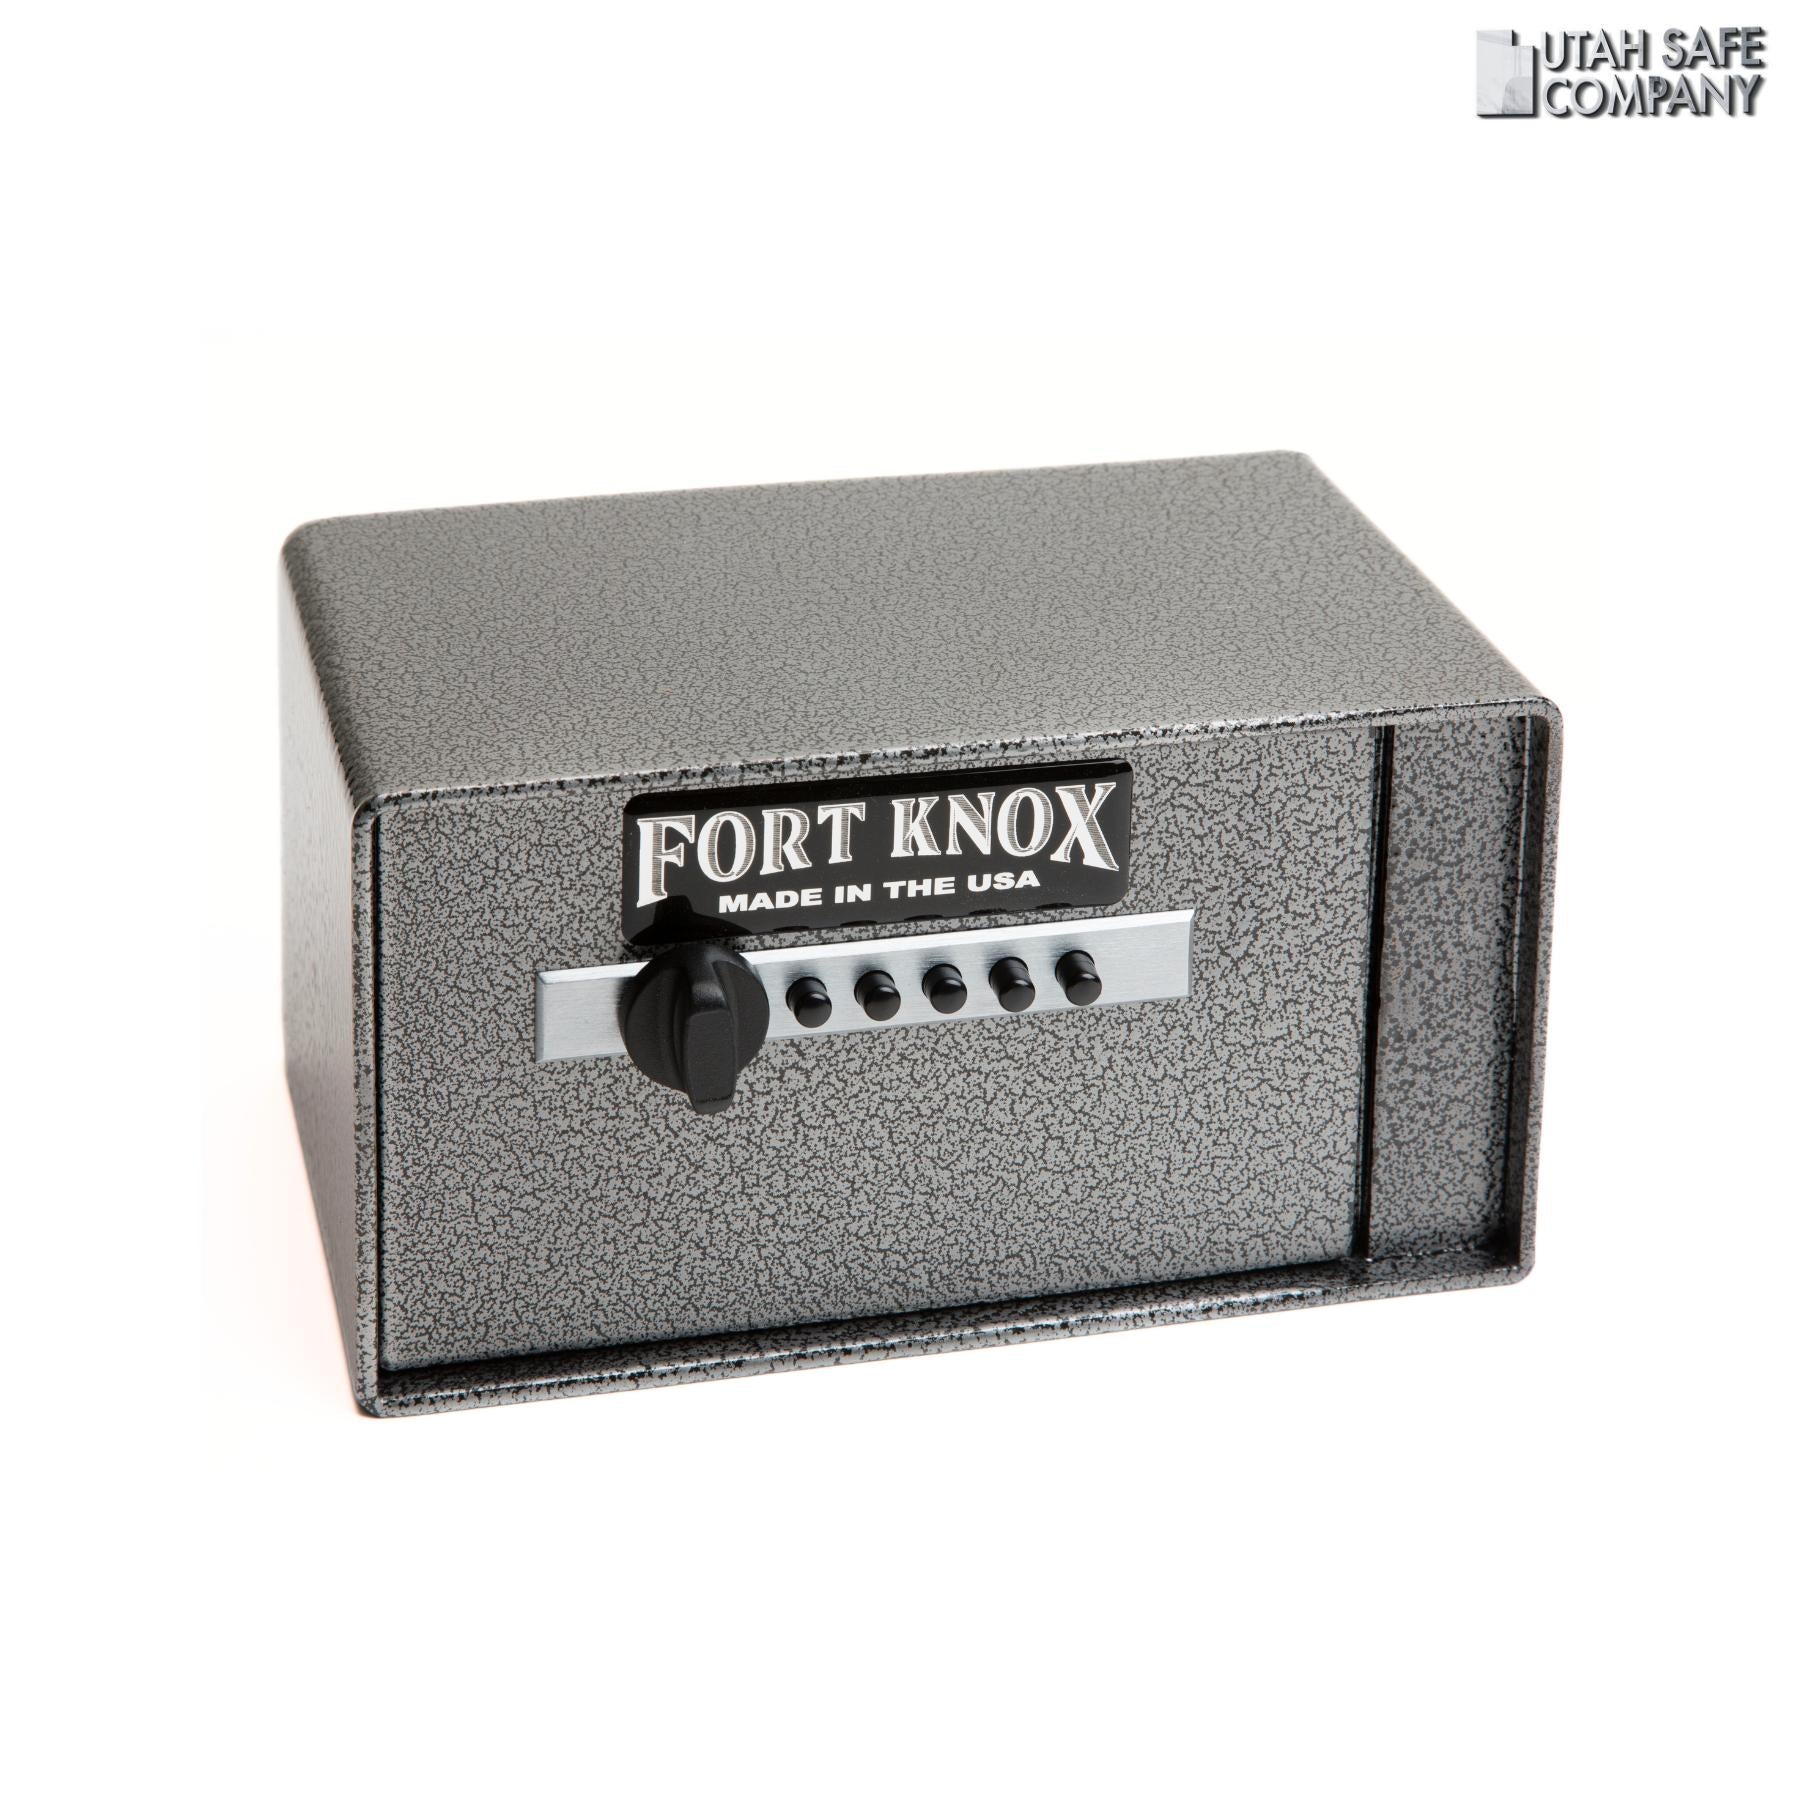 Fort Knox Auto - Utah Safe Company